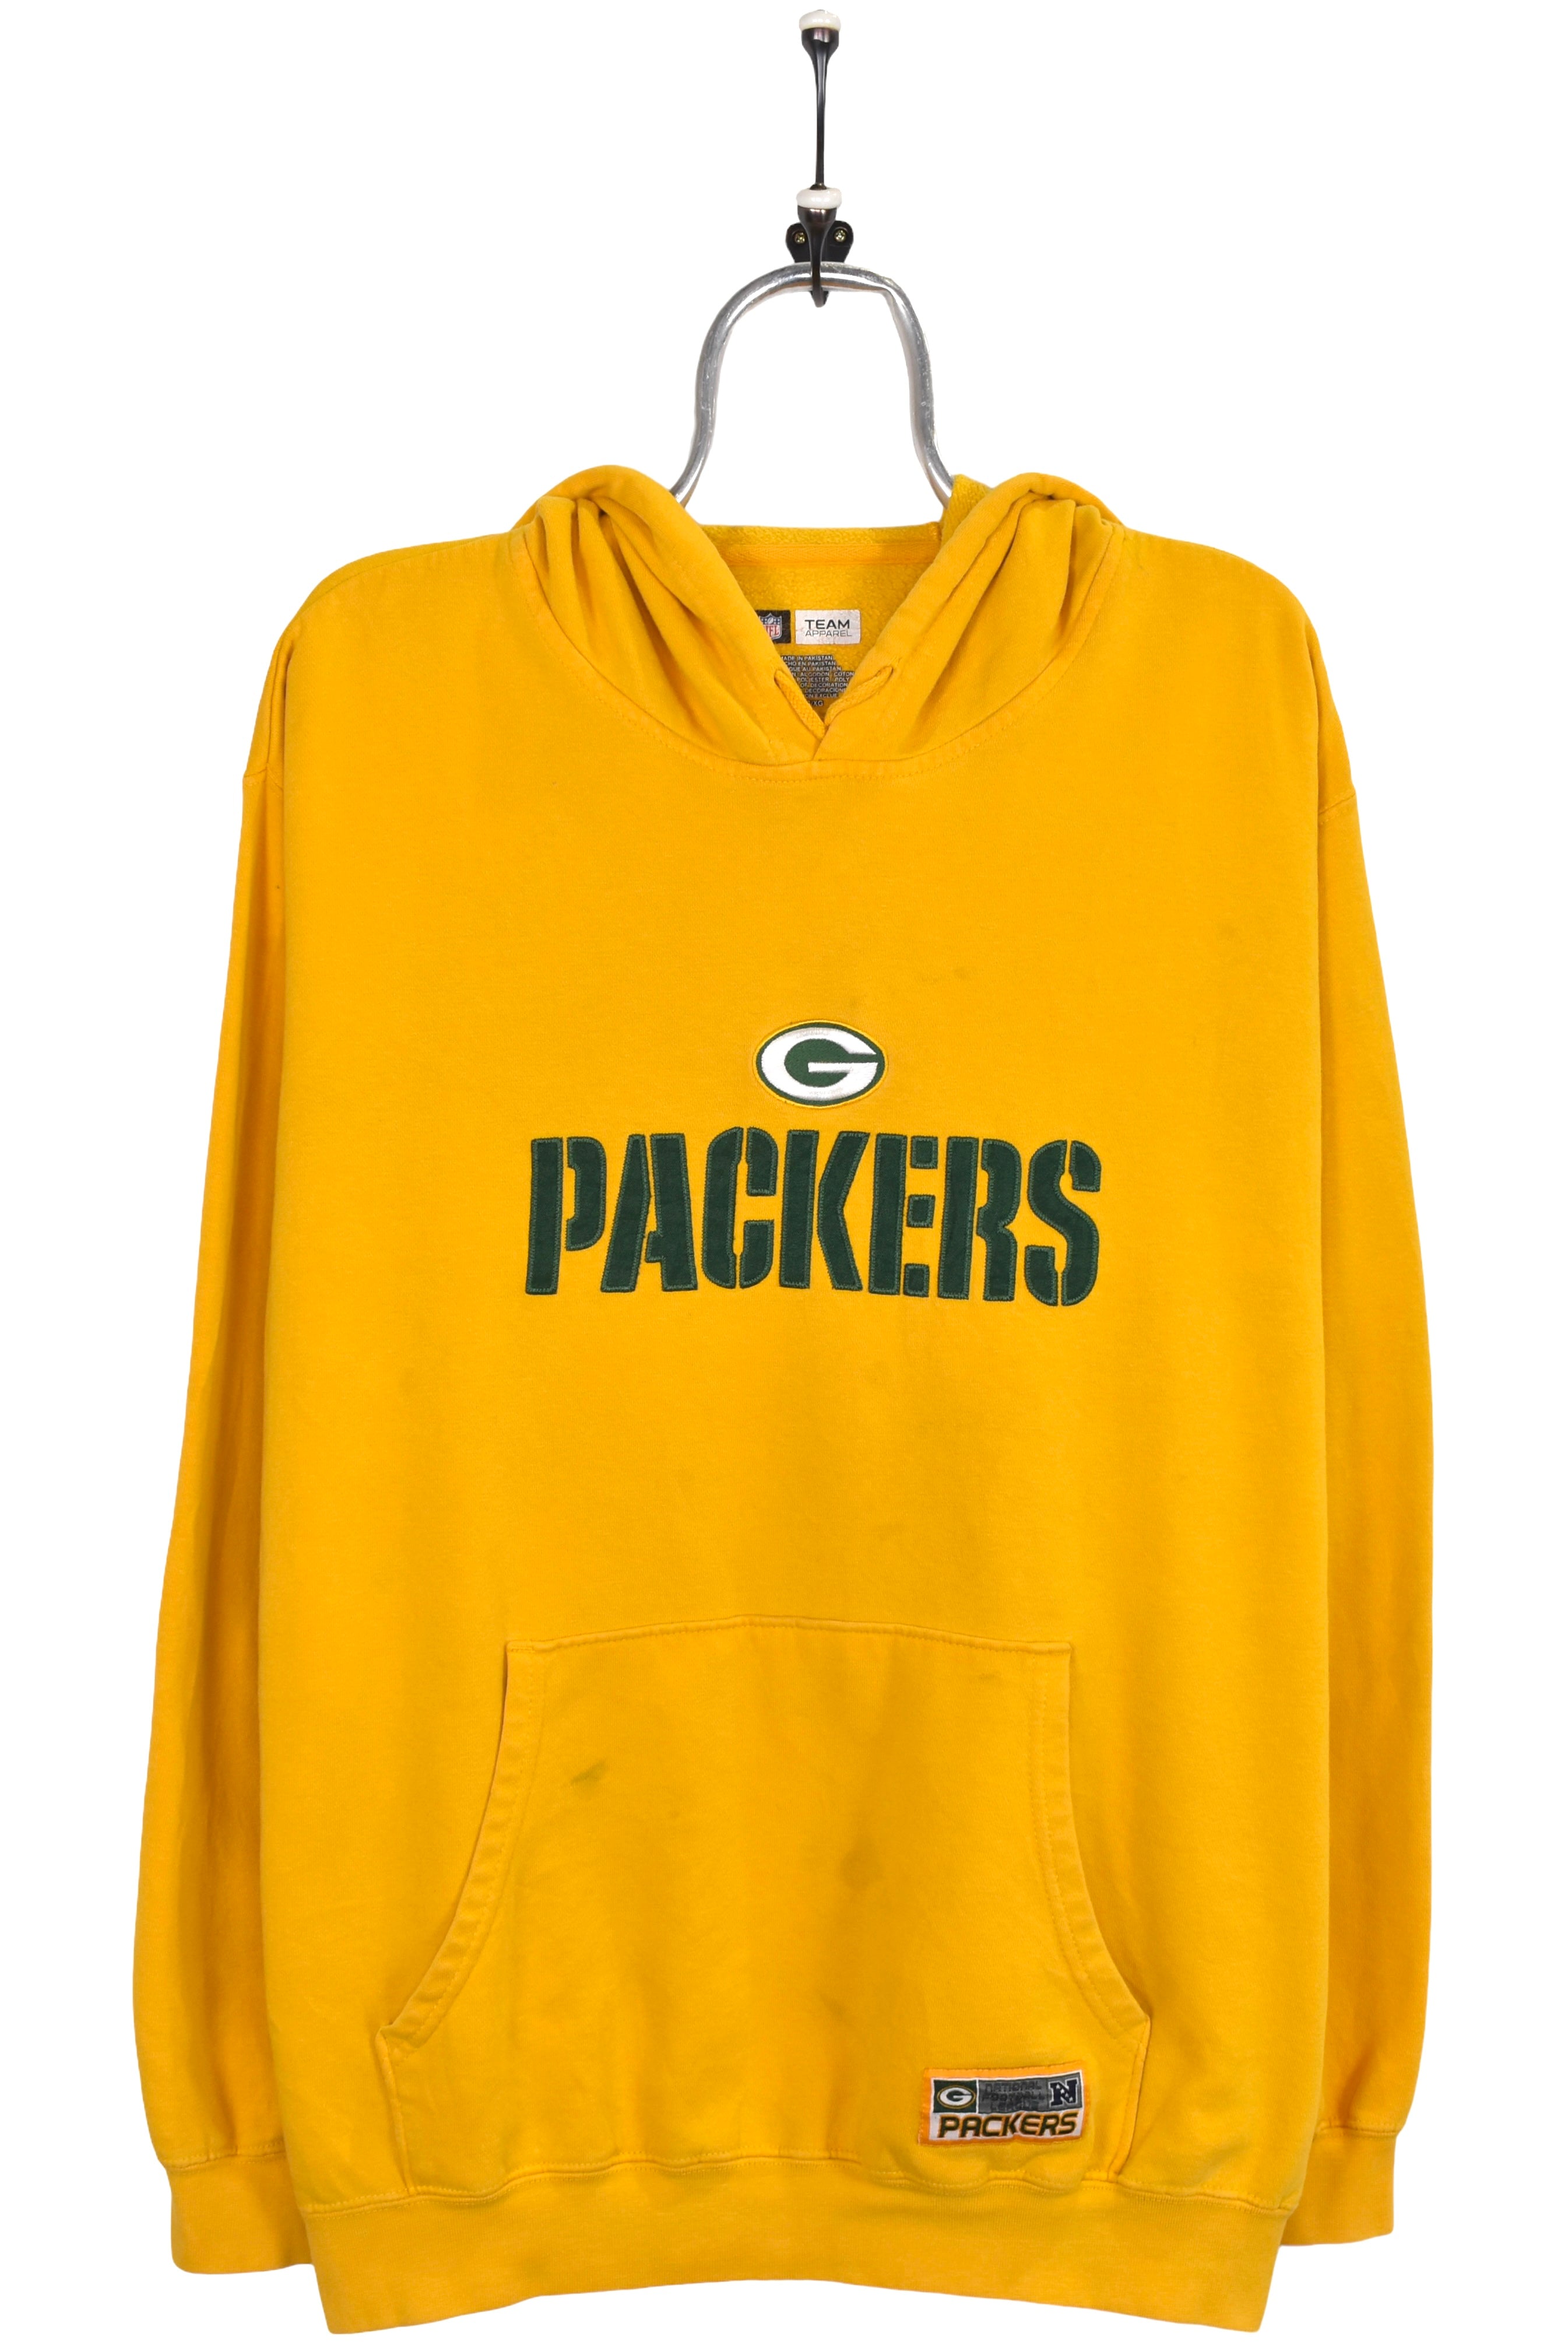 Vintage Green Bay Packers hoodie, yellow NFL embroidered sweatshirt 